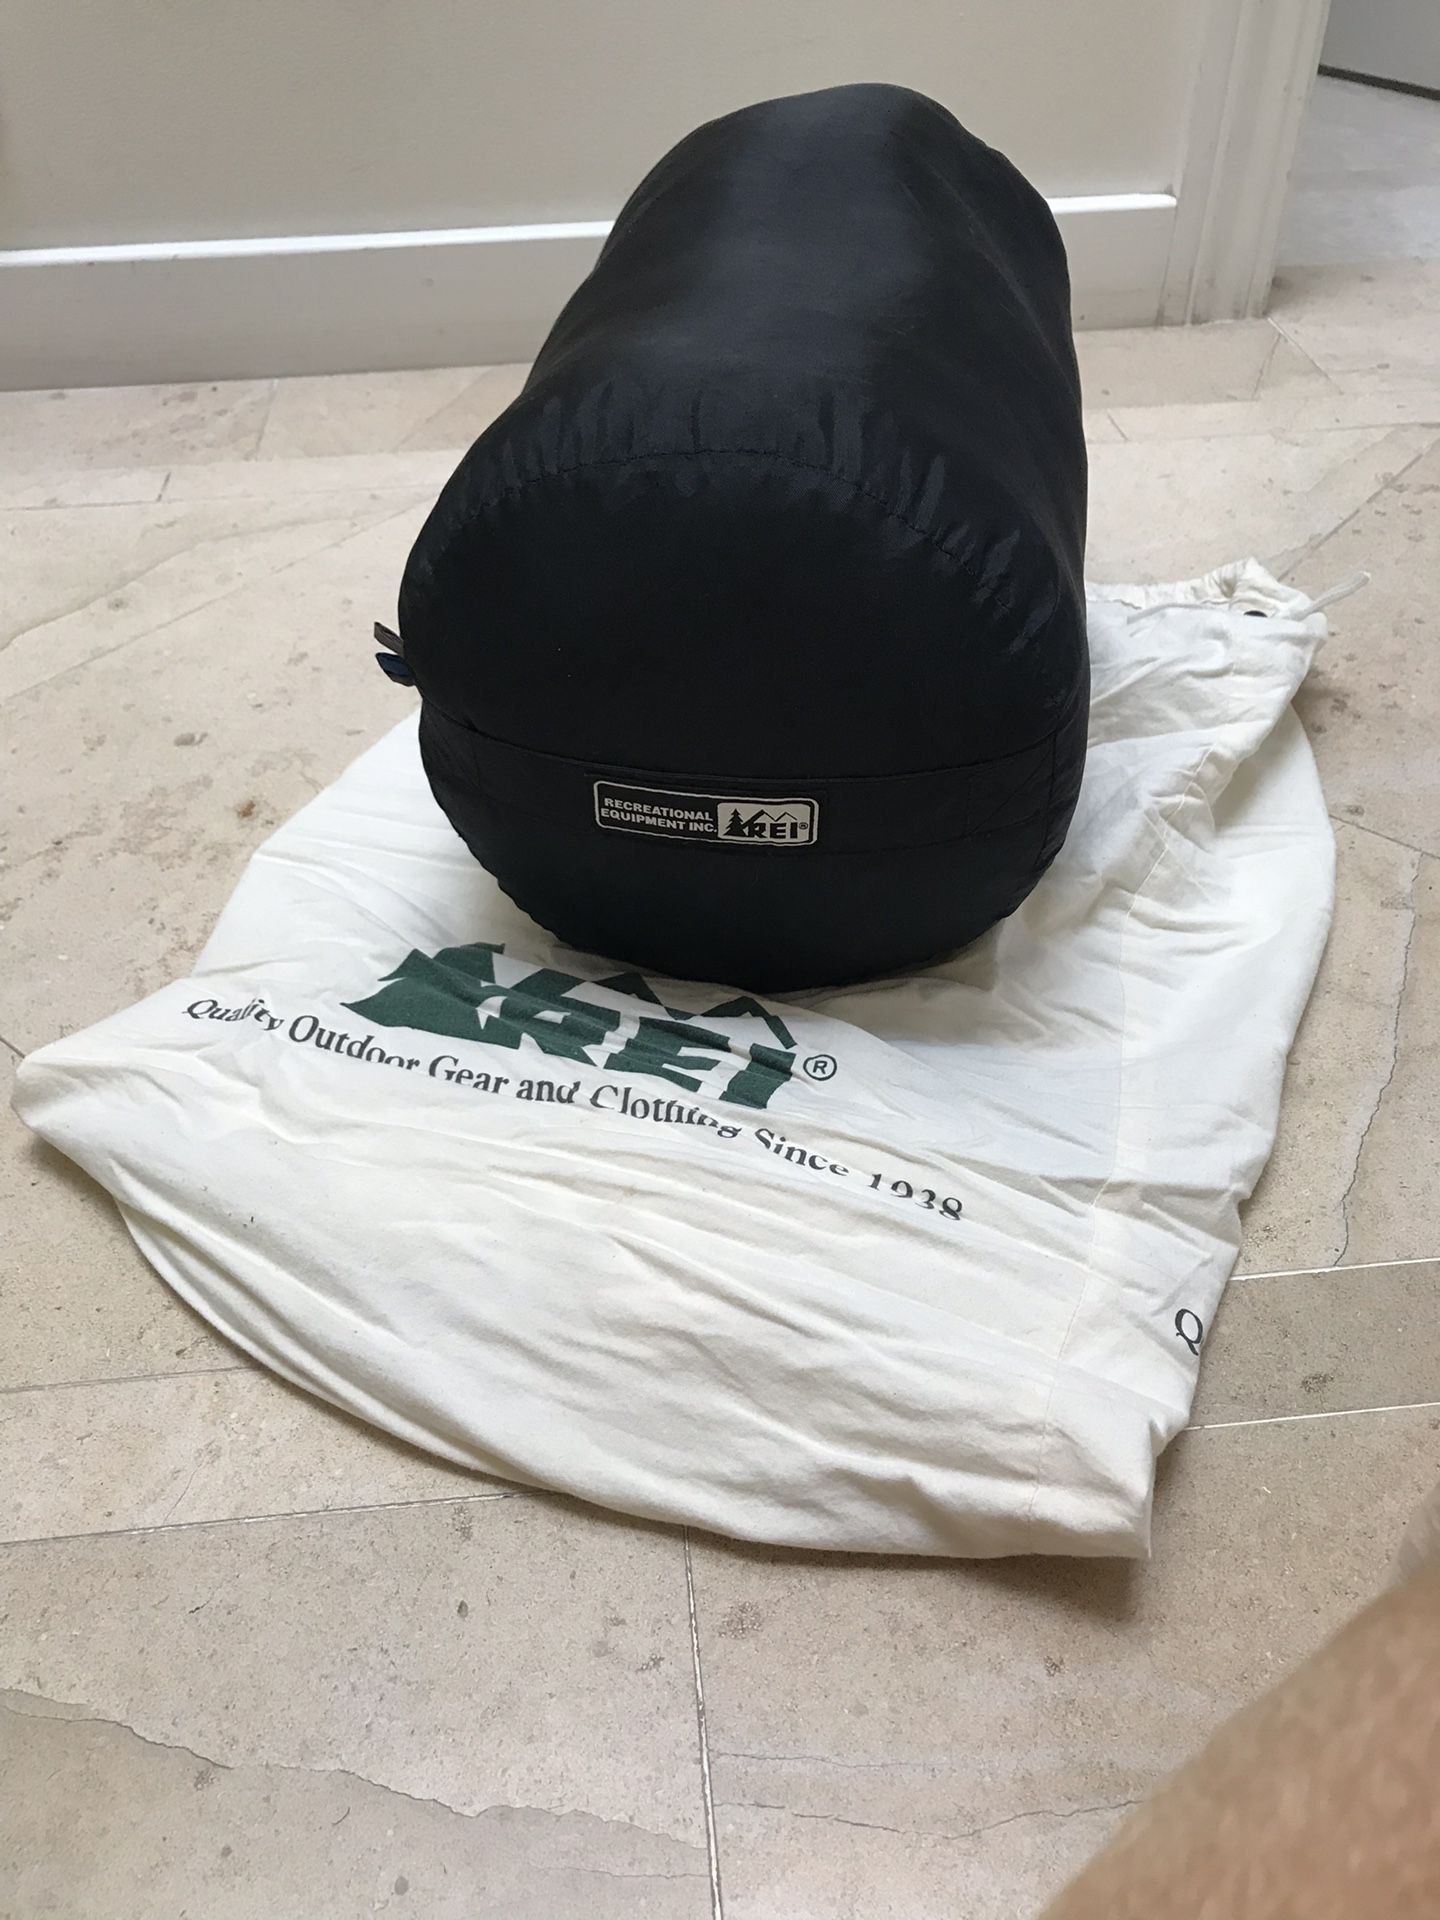 REI Polar Pod 20 sleeping bag